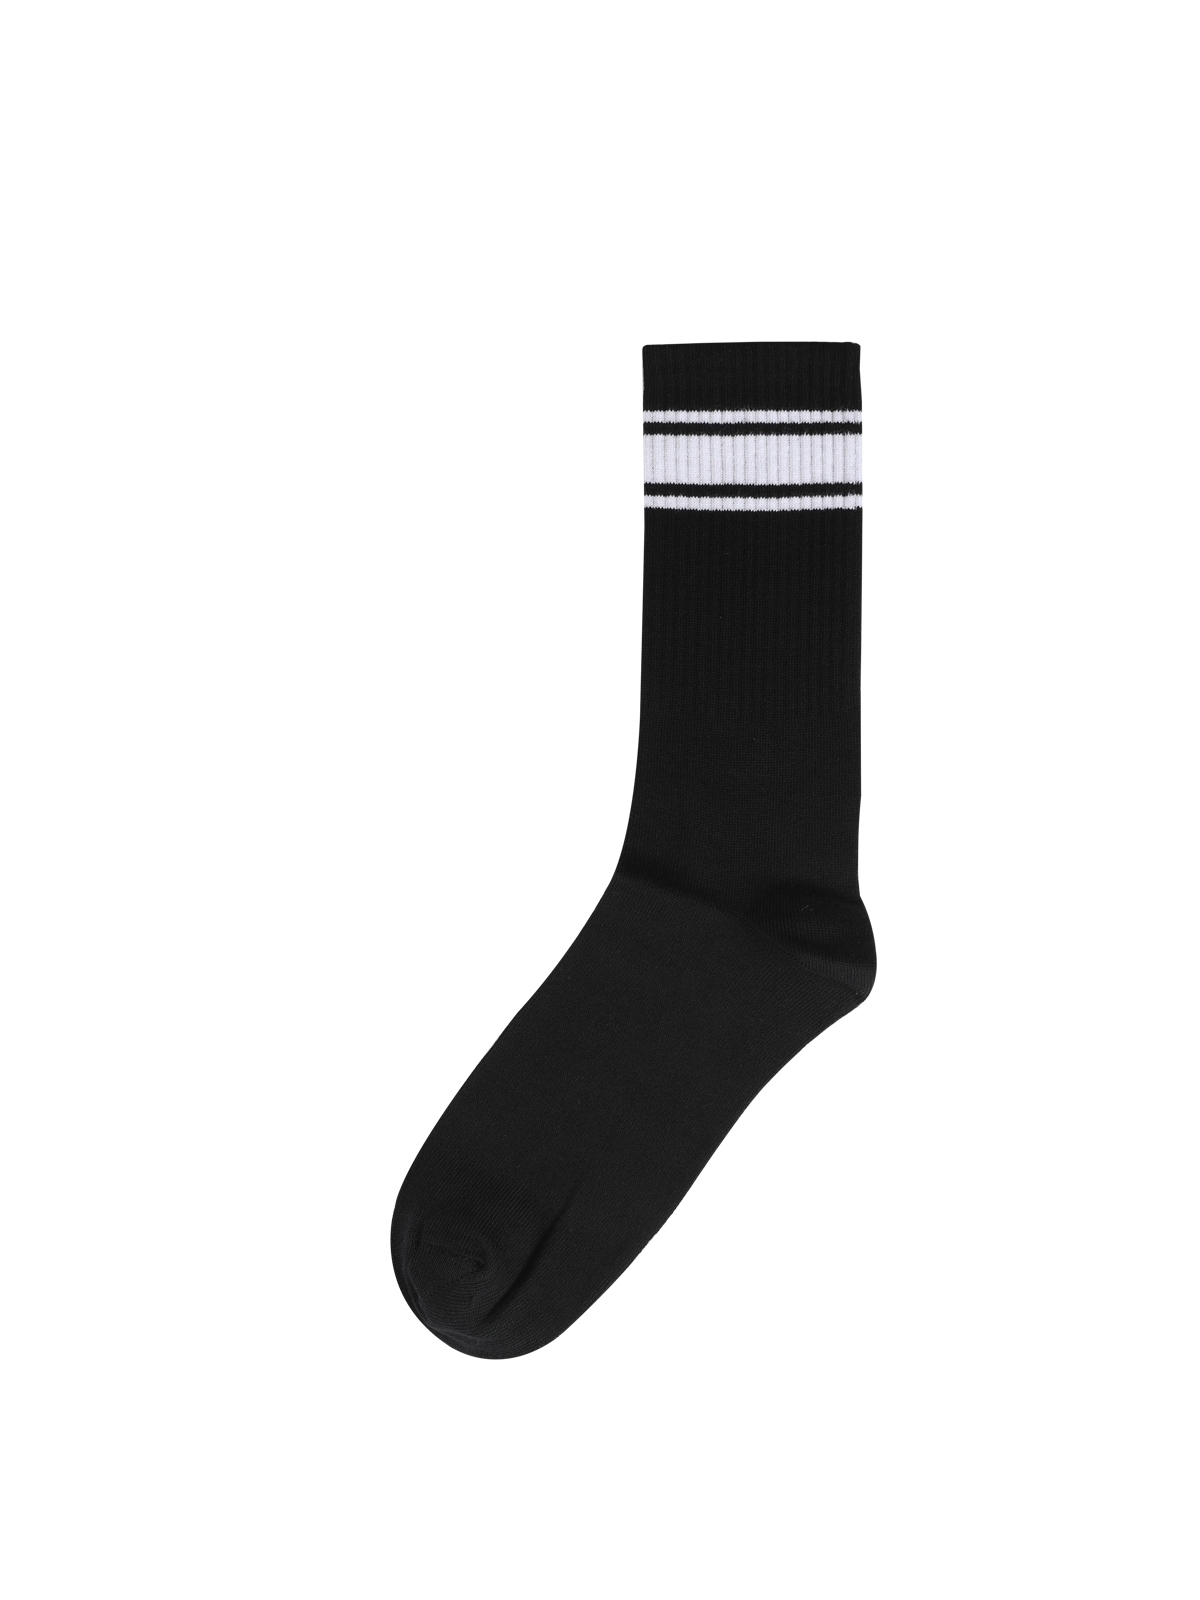 Siyah Erkek Çorap